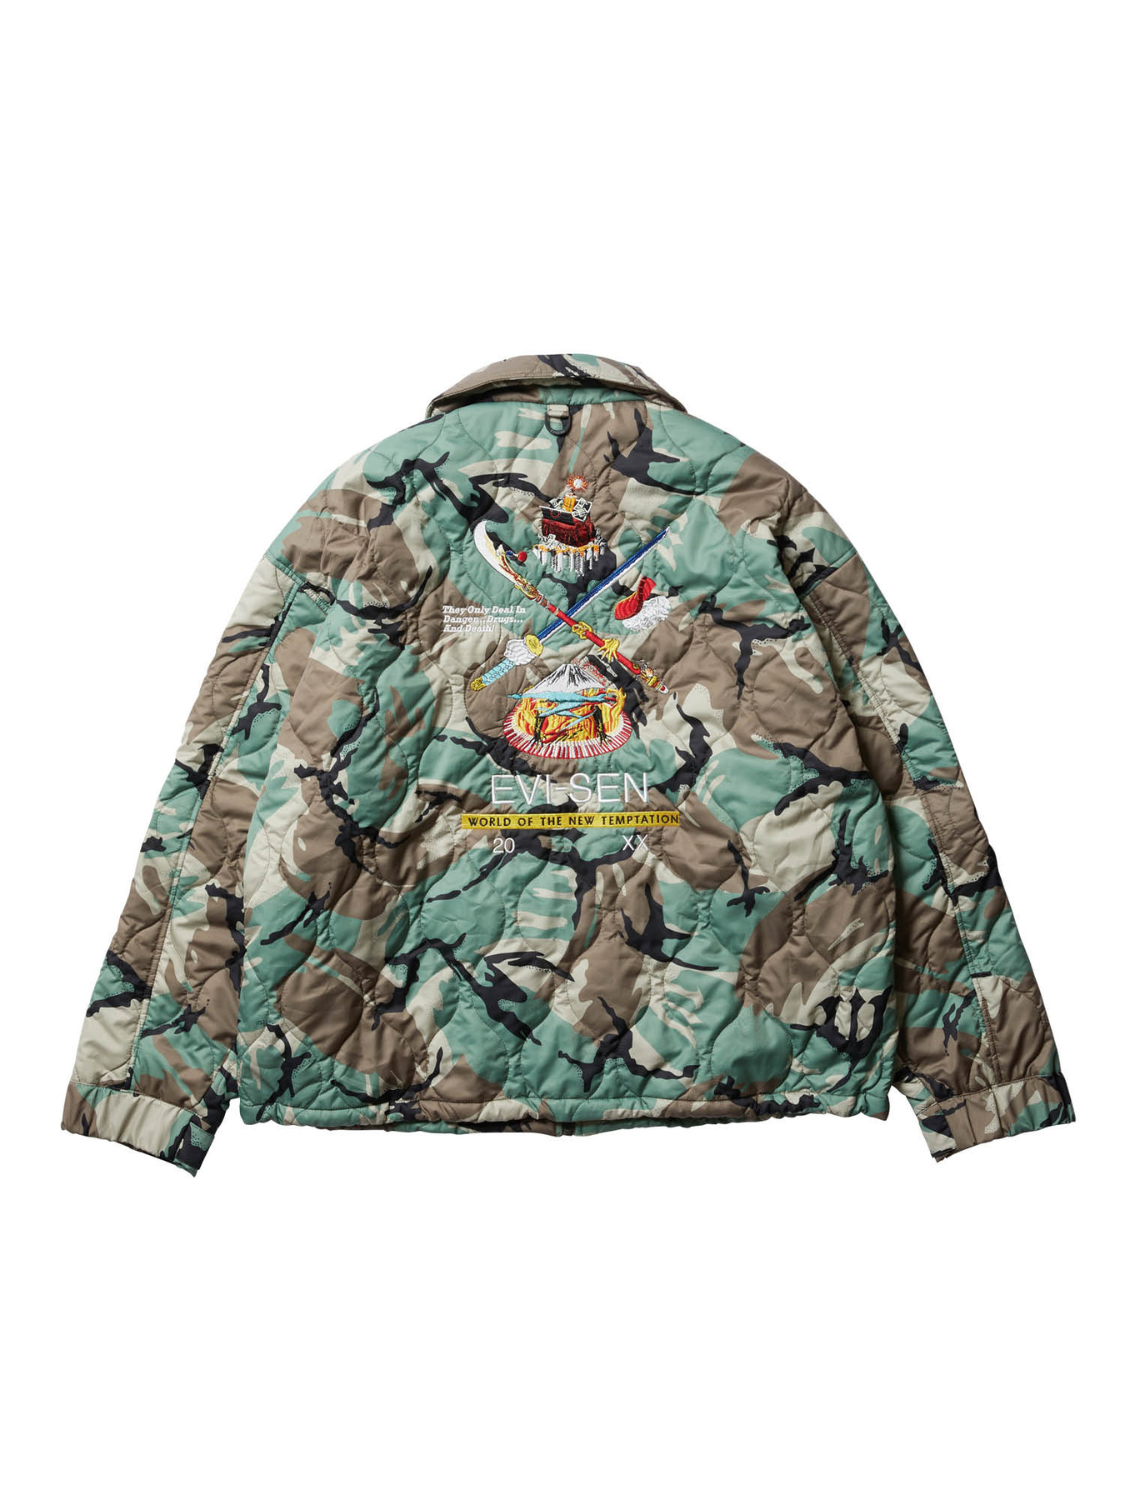 EVISEN Souvenir Quilting Jacket - Camo